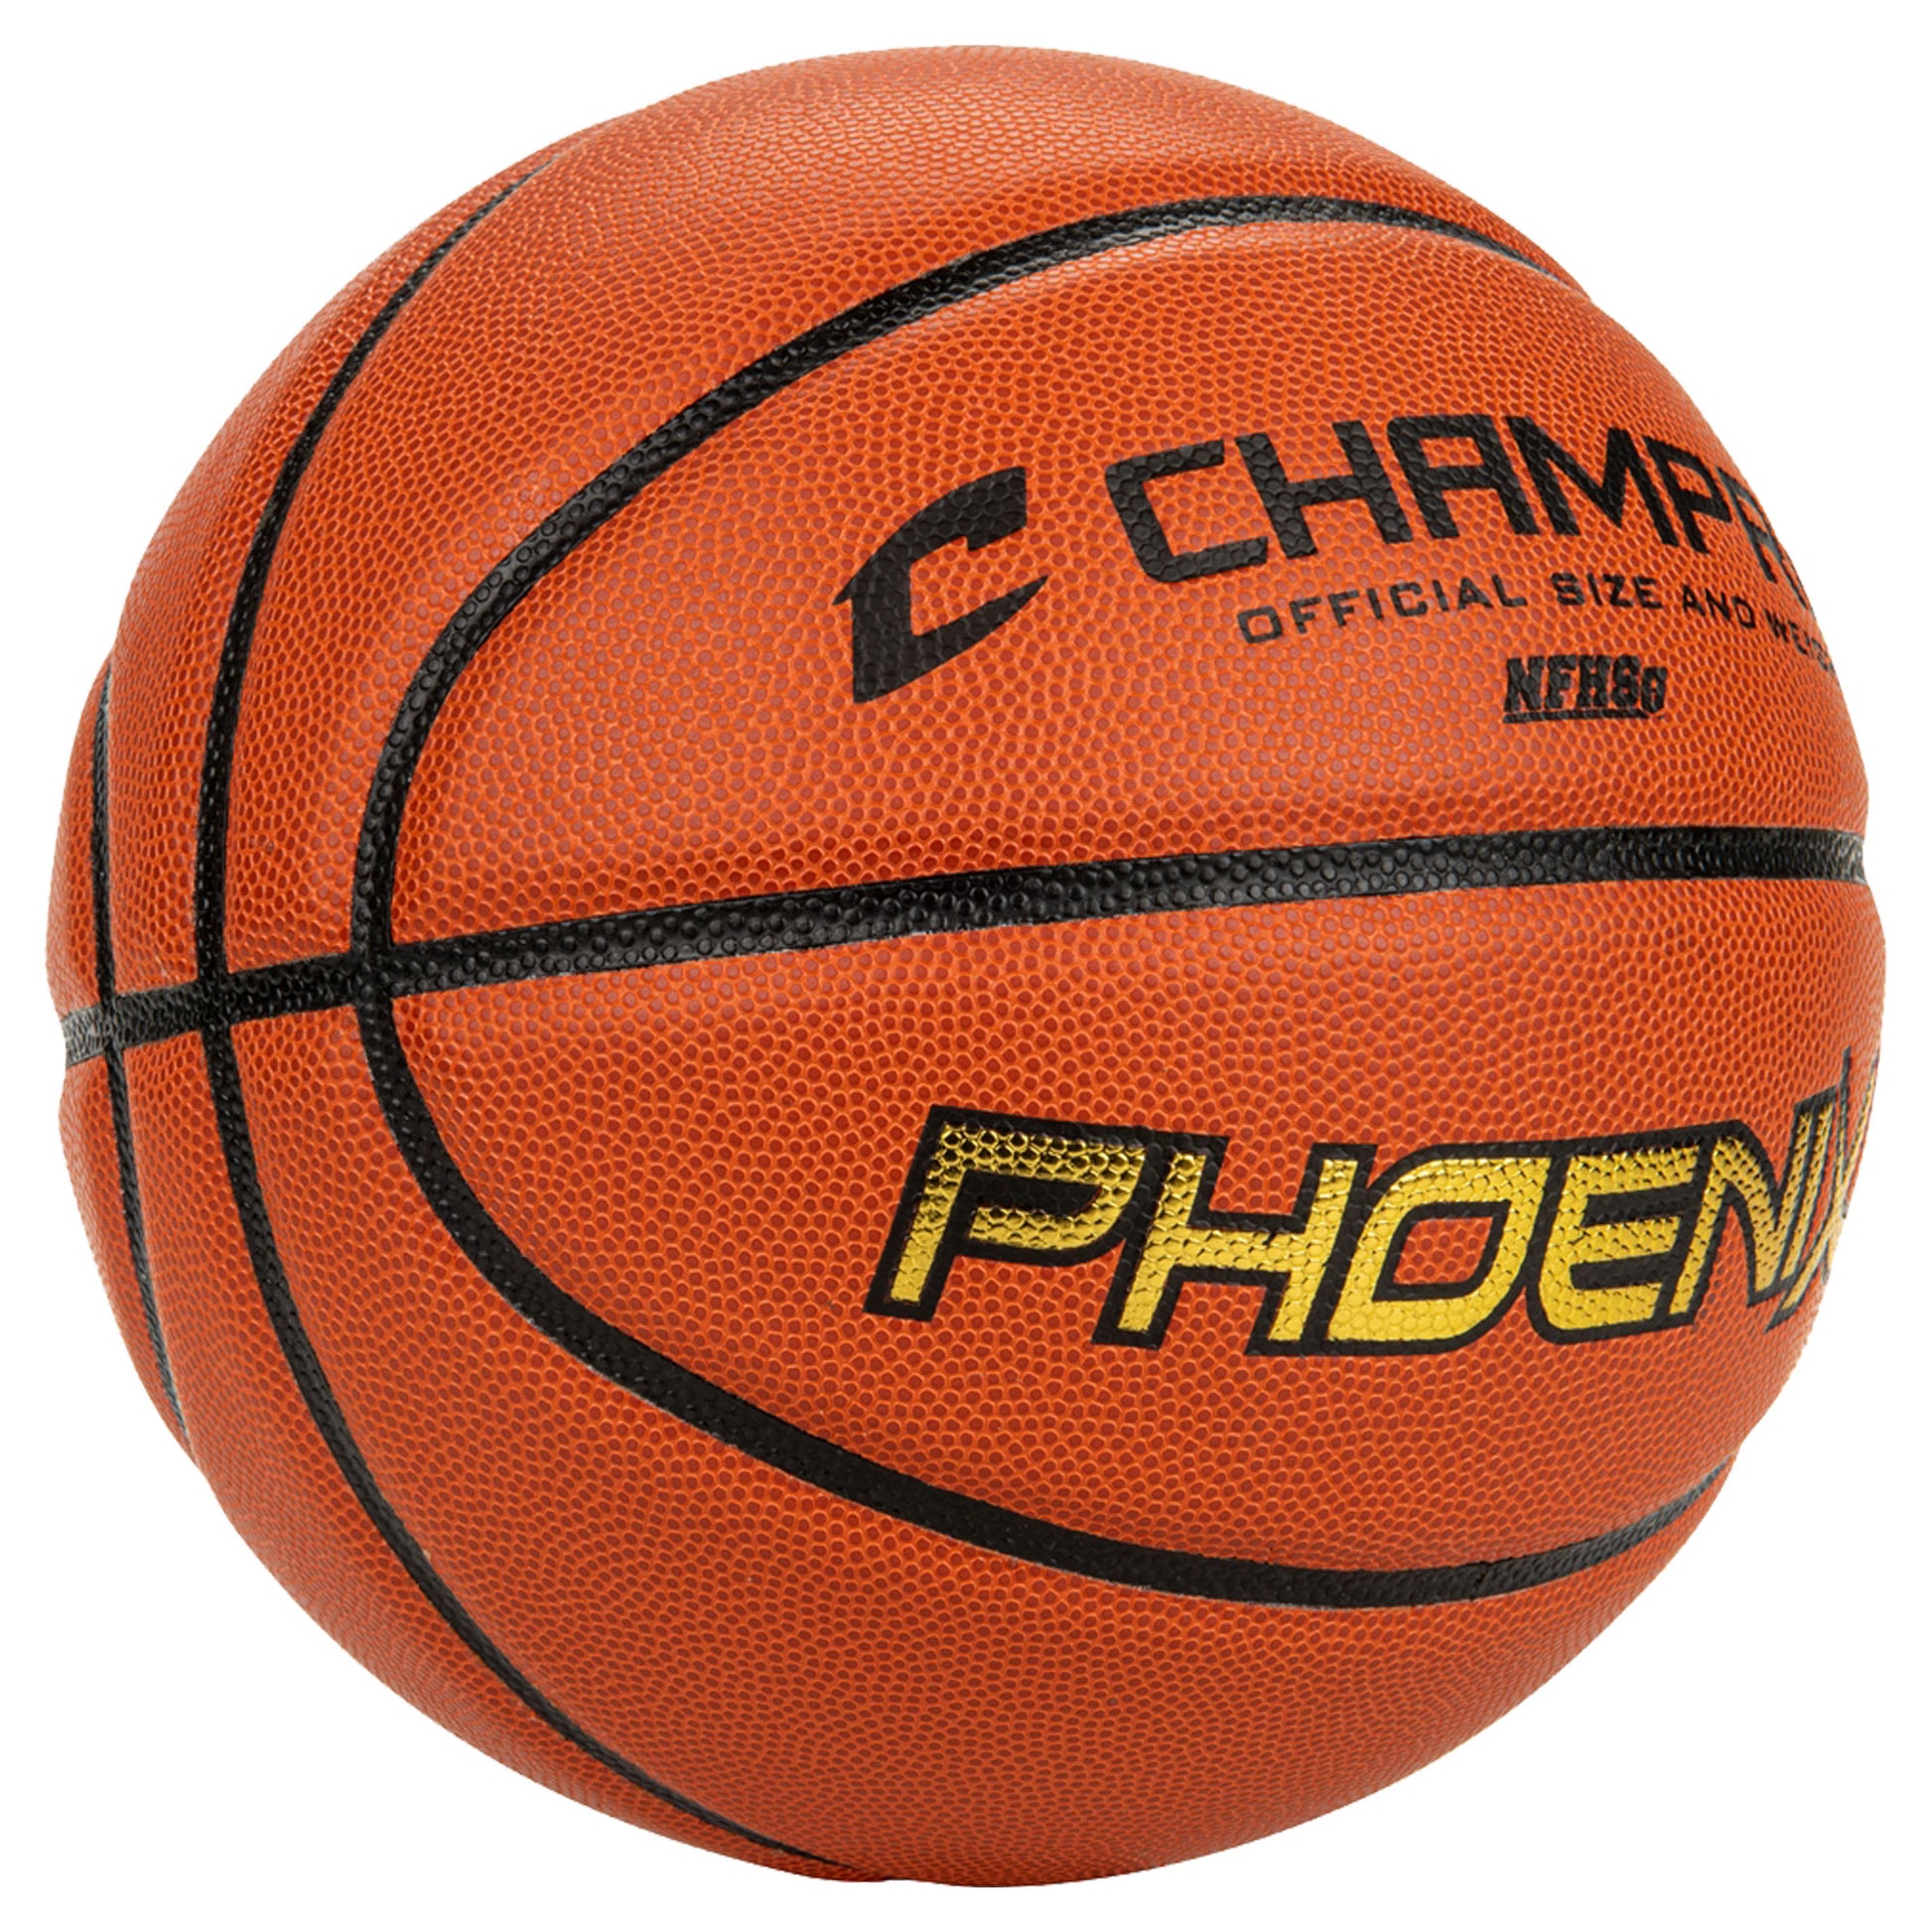 Champro Sports Phoenix Microfiber Indoor Basketball – Red's Team